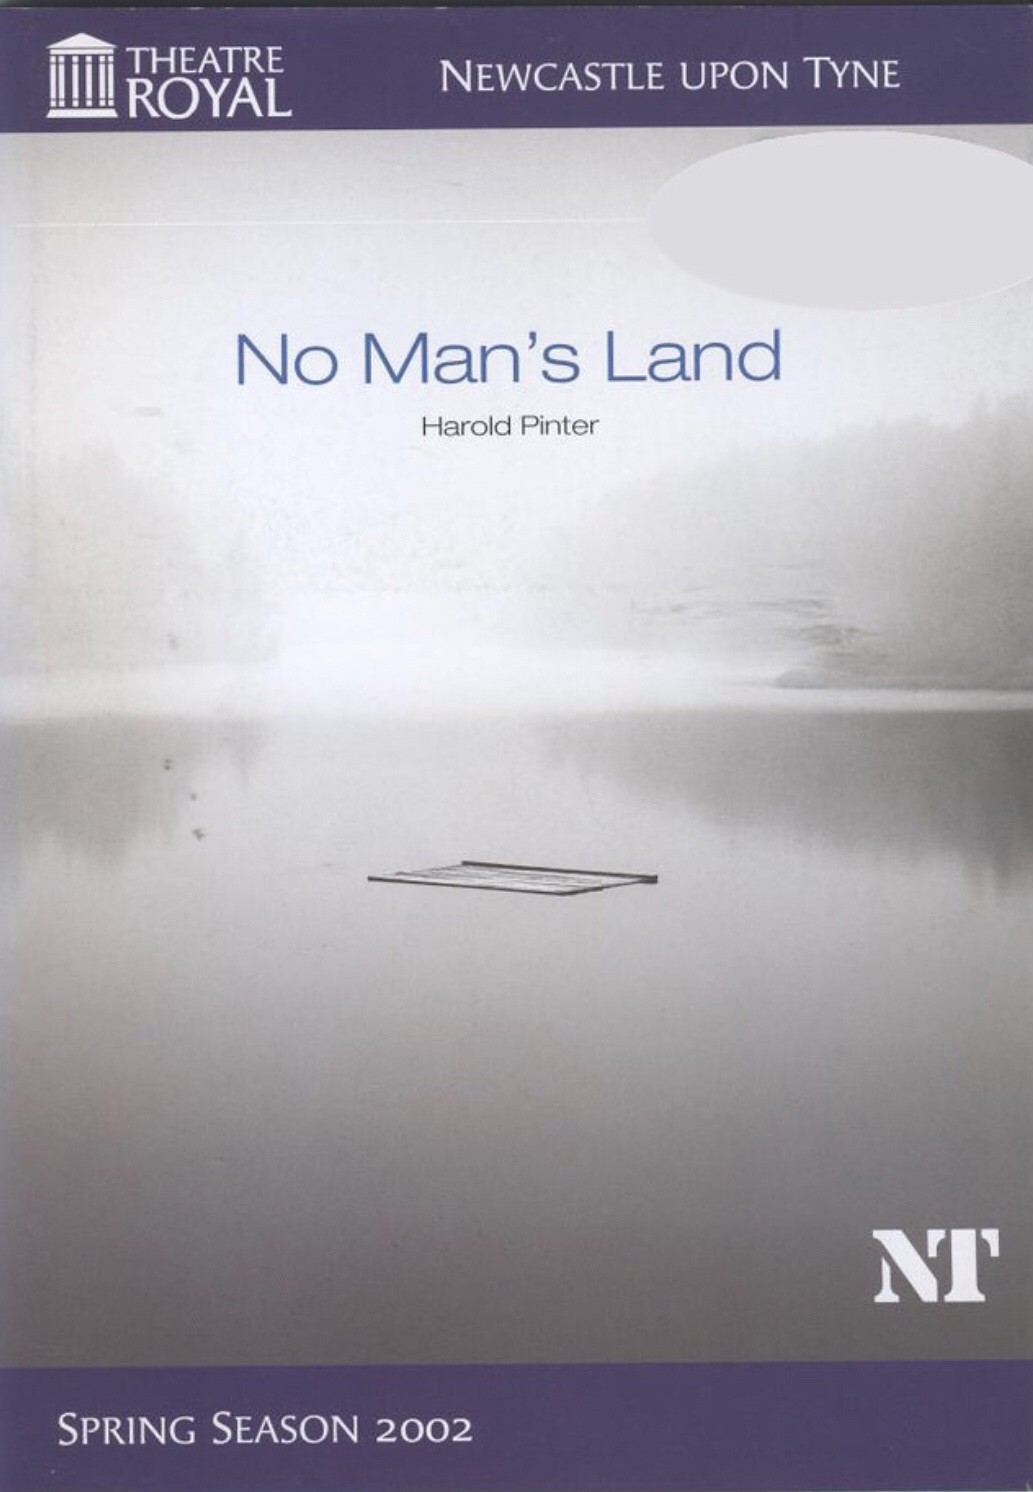 No Man's Land (Lyttelton Tour)*